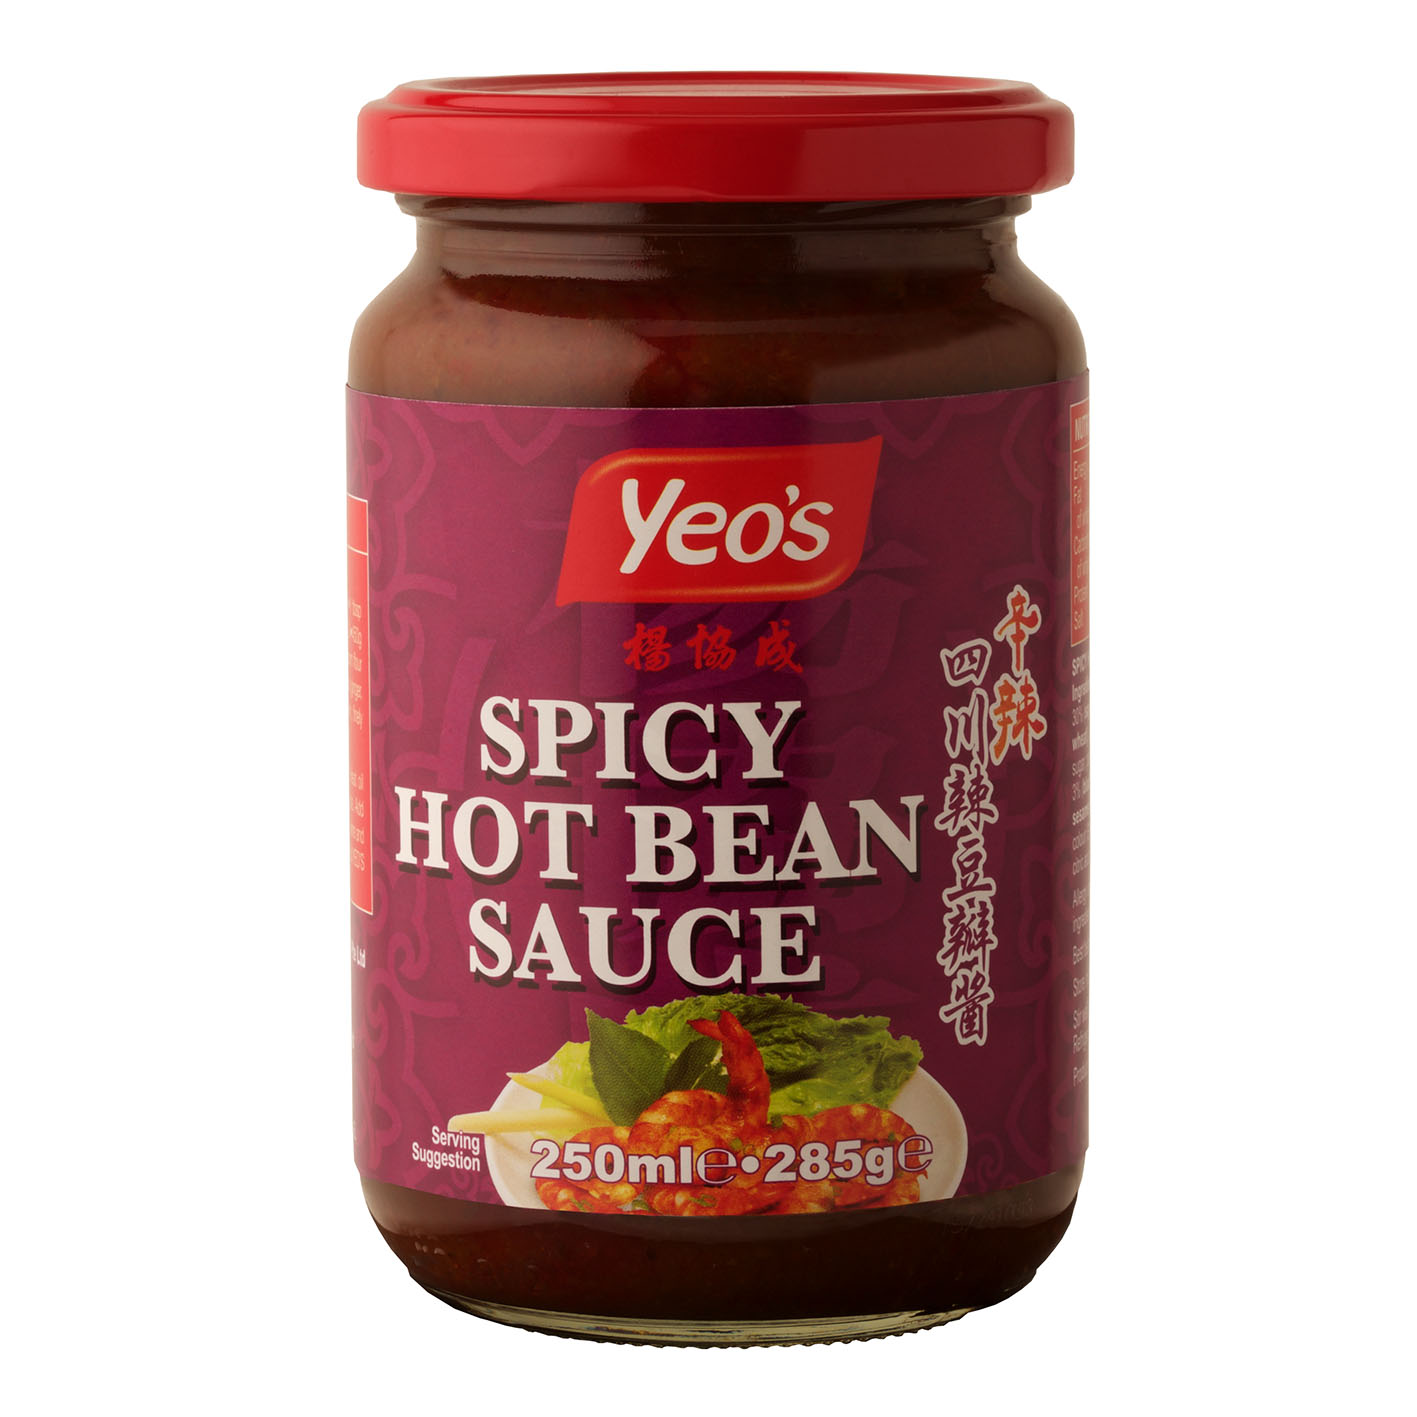 Yeo's Spicy Hot Bean Sauce